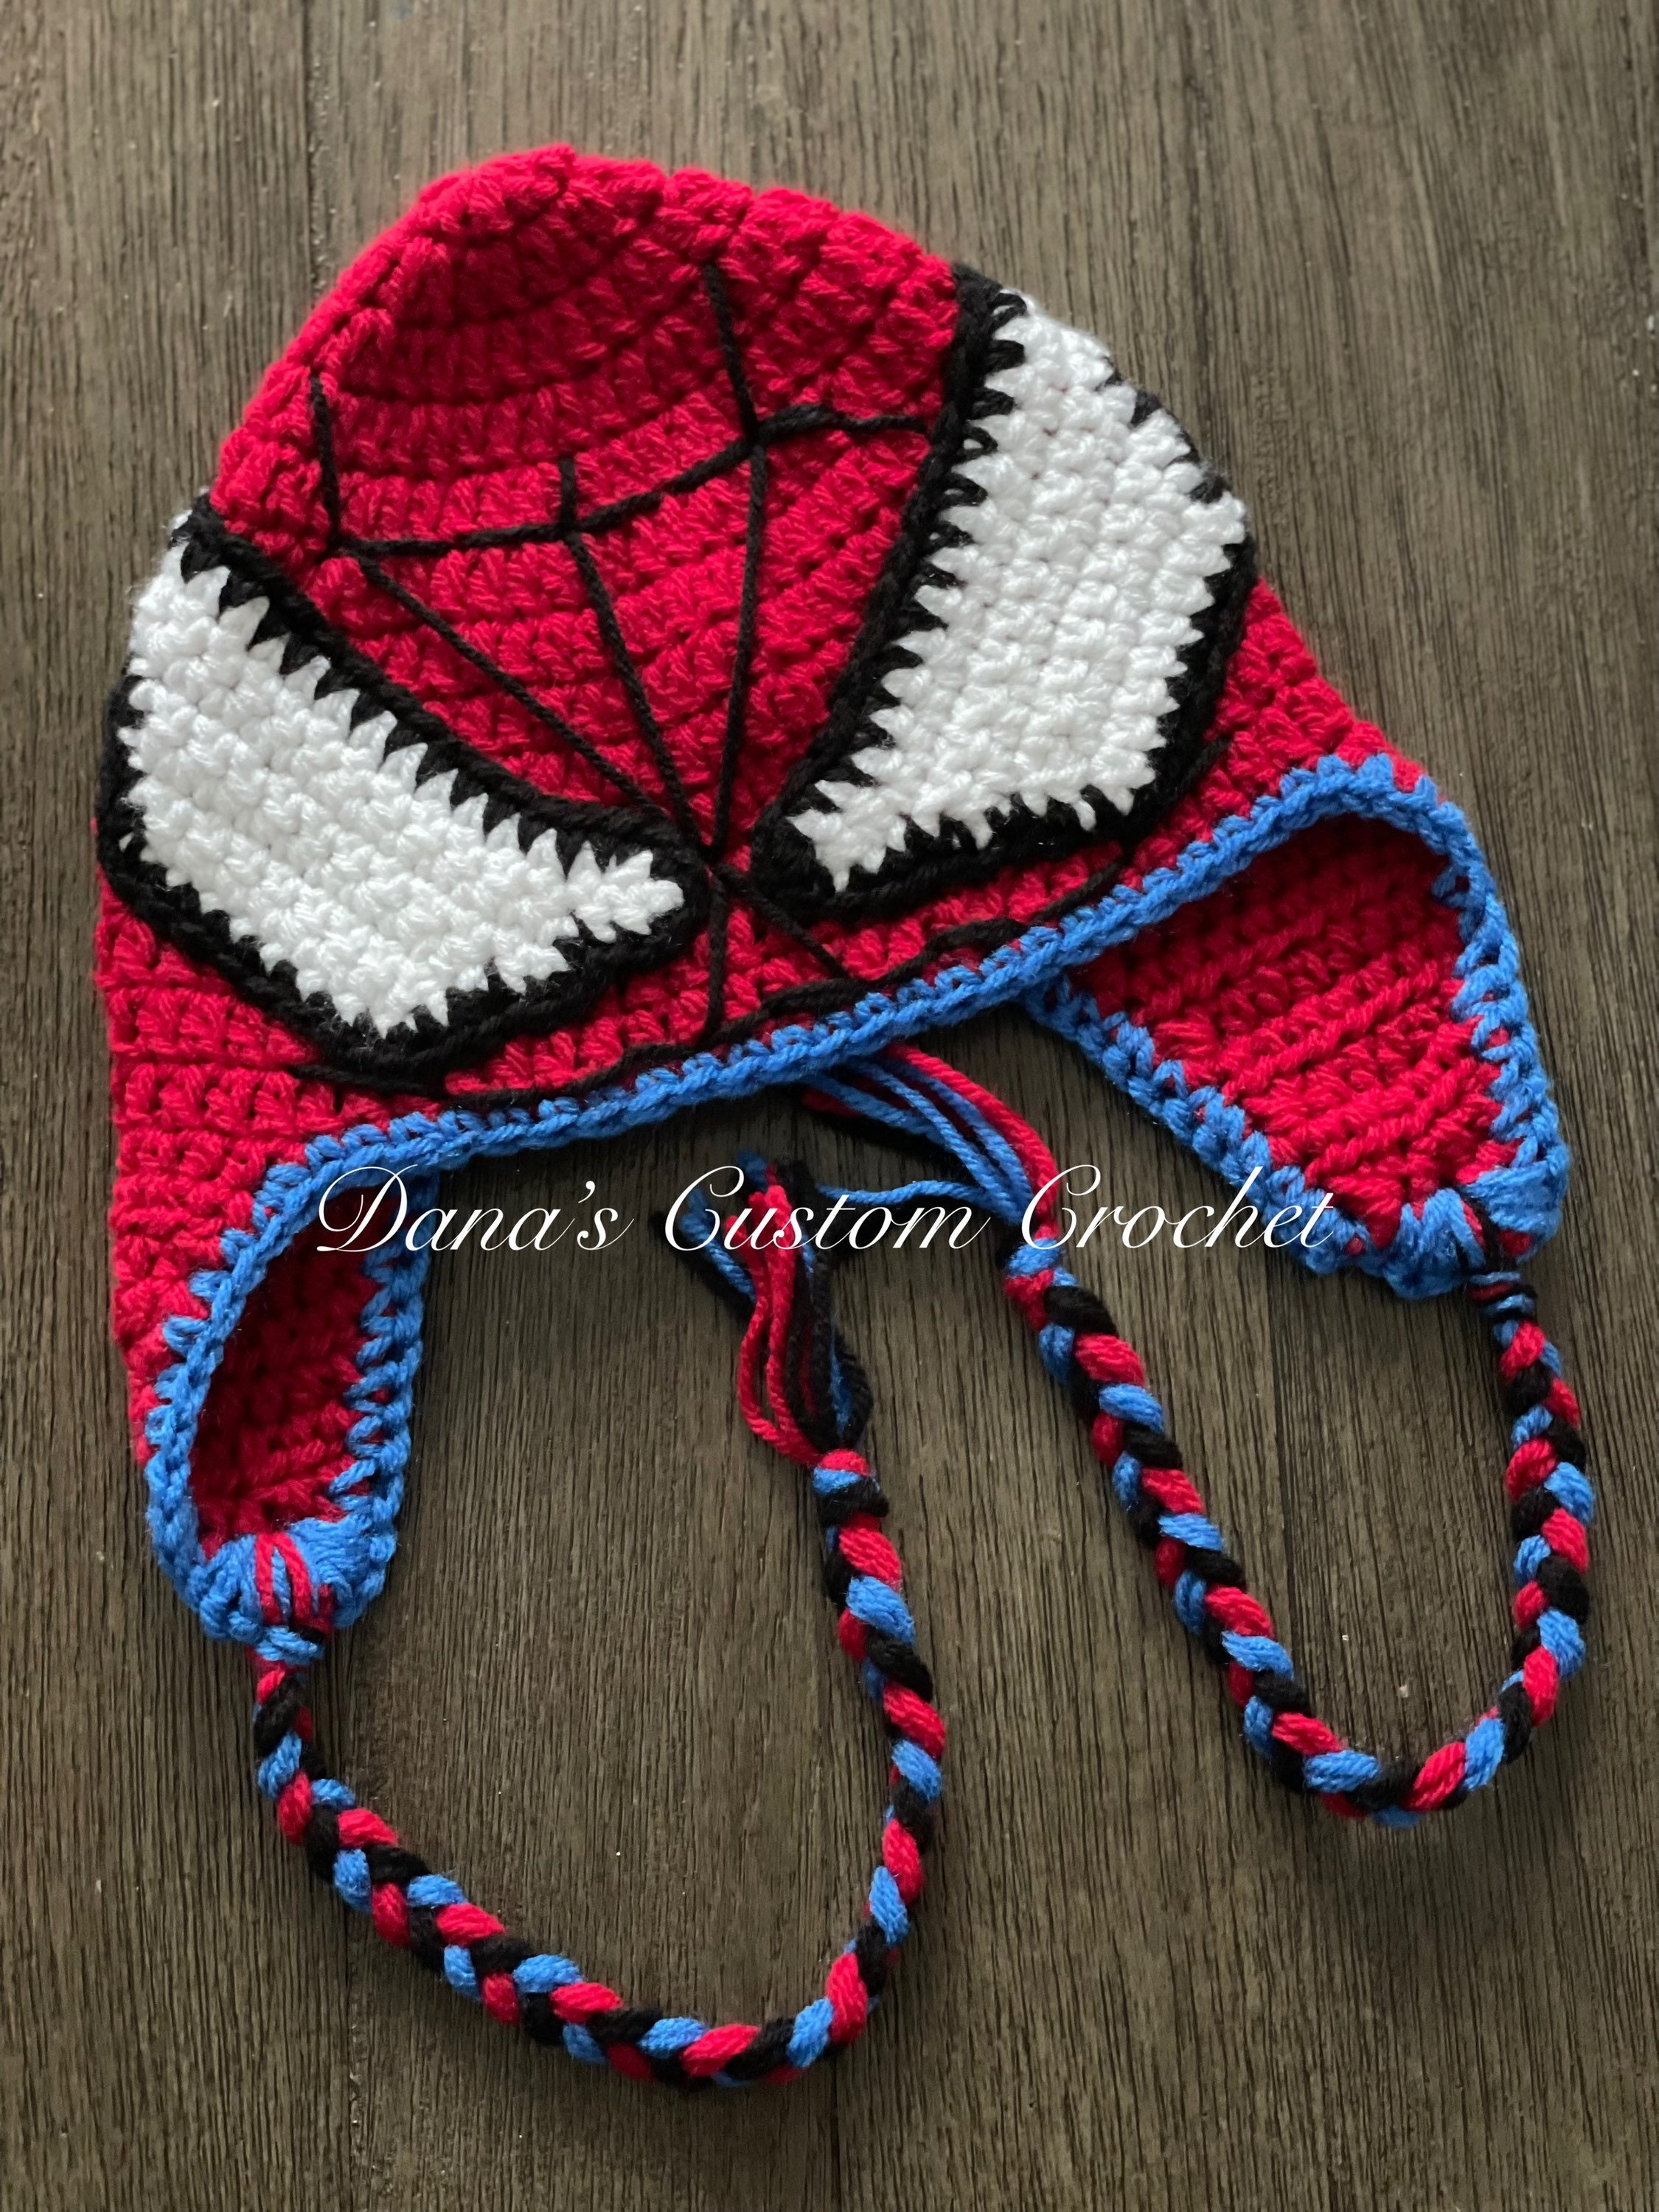 Spiderman crochet hat - Etsy España